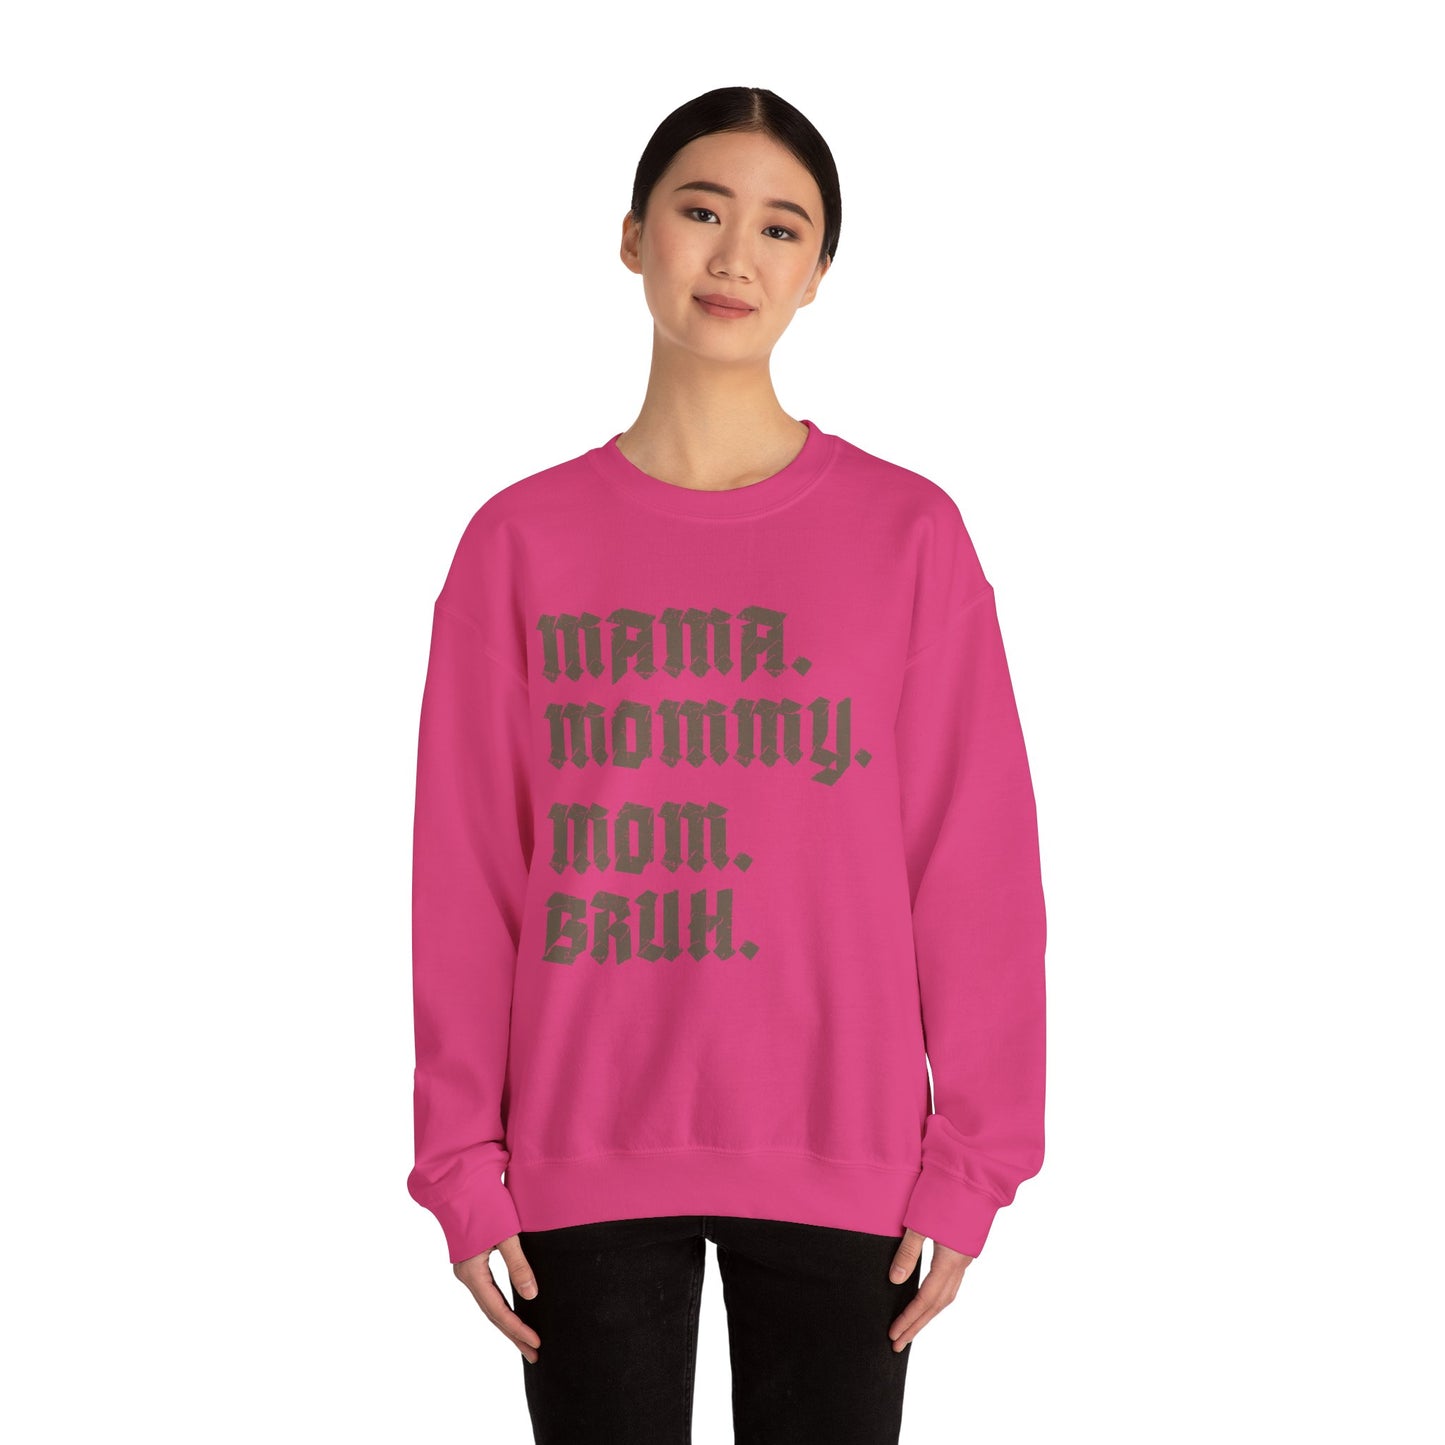 Mama Mommy Mom Bruh Sweatshirt, Mothers Day Sweatshirt, Funny Mom Sweatshirt, Gift for Mom, Mama Sweatshirt, Sarcastic Sweatshirt, S1593